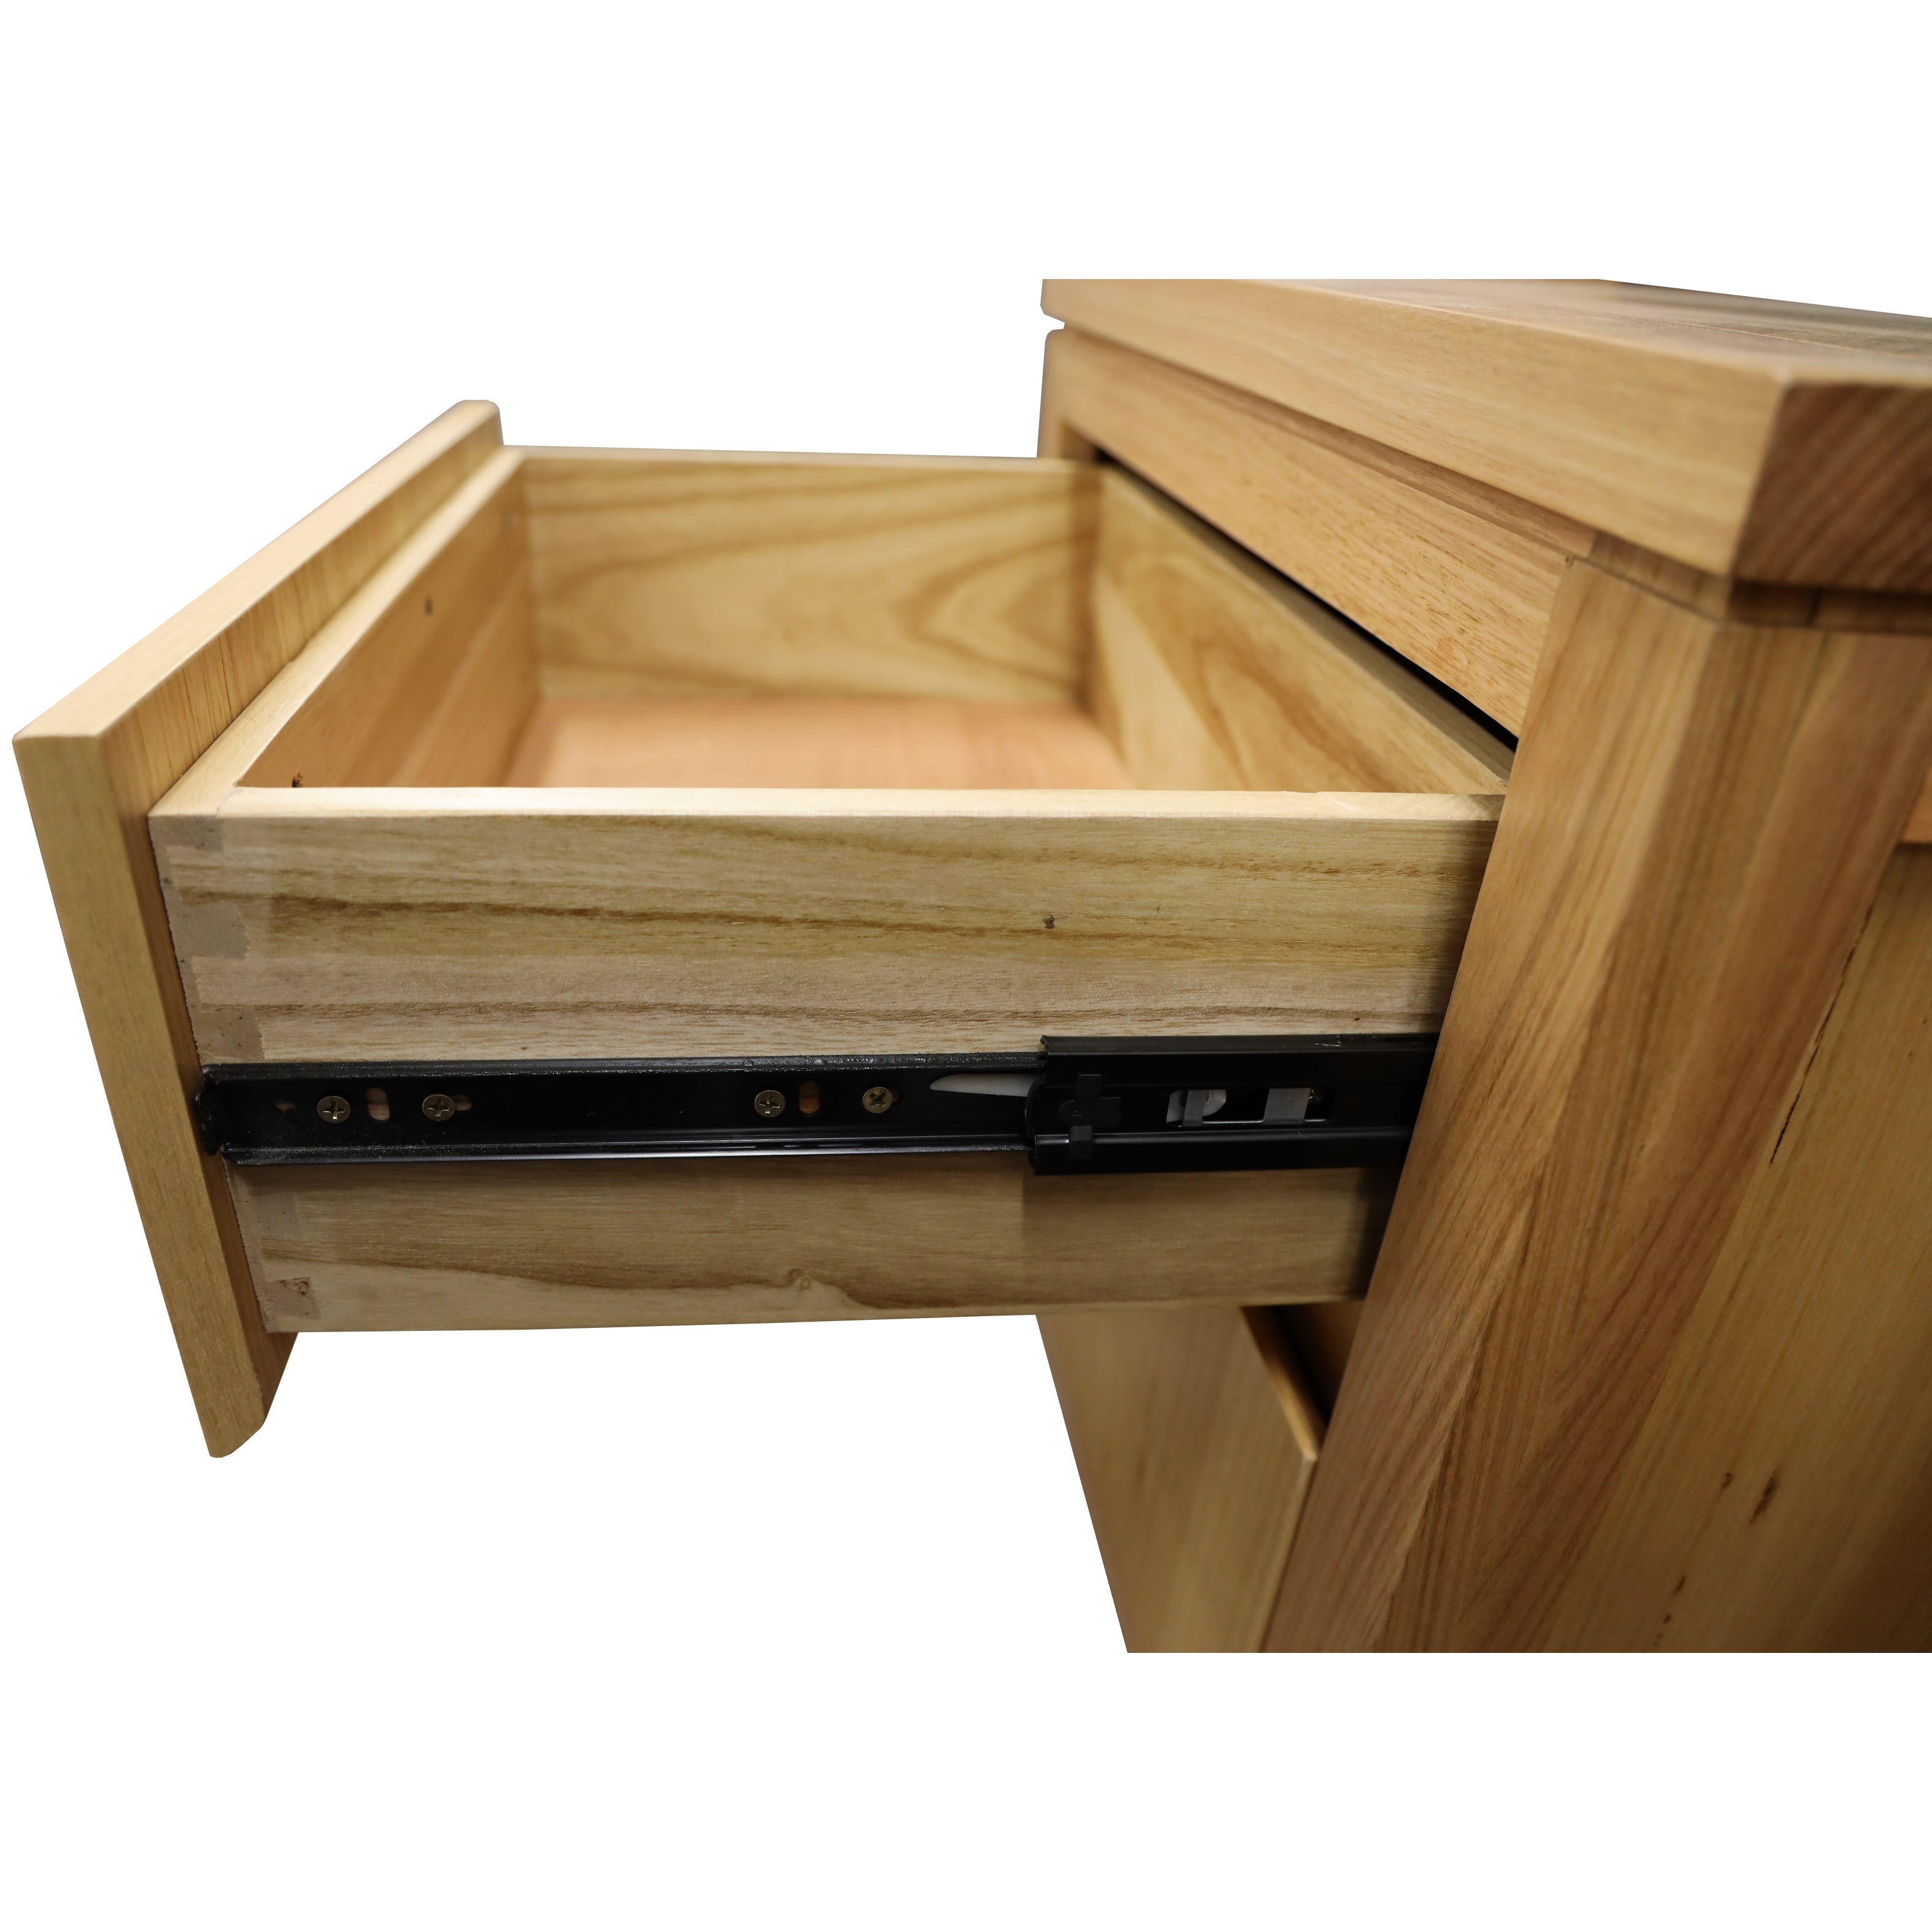 End Table 2-Drawer Storage Cabinet for Bedroom - Elegant Nightstand